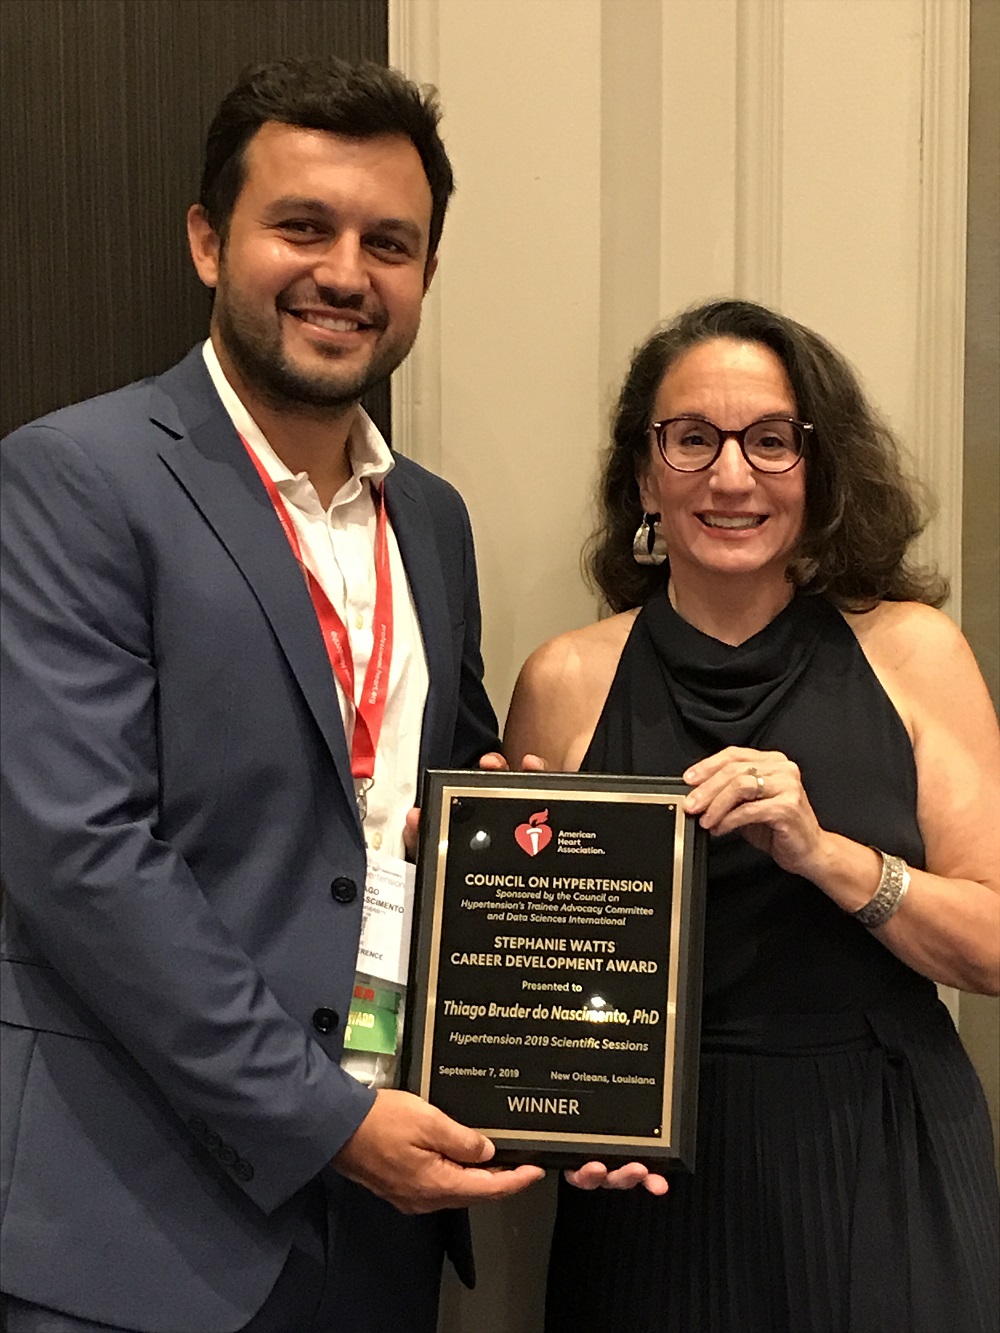 2019 AHA  Hypertension Scientific Session   “Stephanie Watts Career Development Award” awarded  to Thiago BRUDER DO NASCIMENTO 